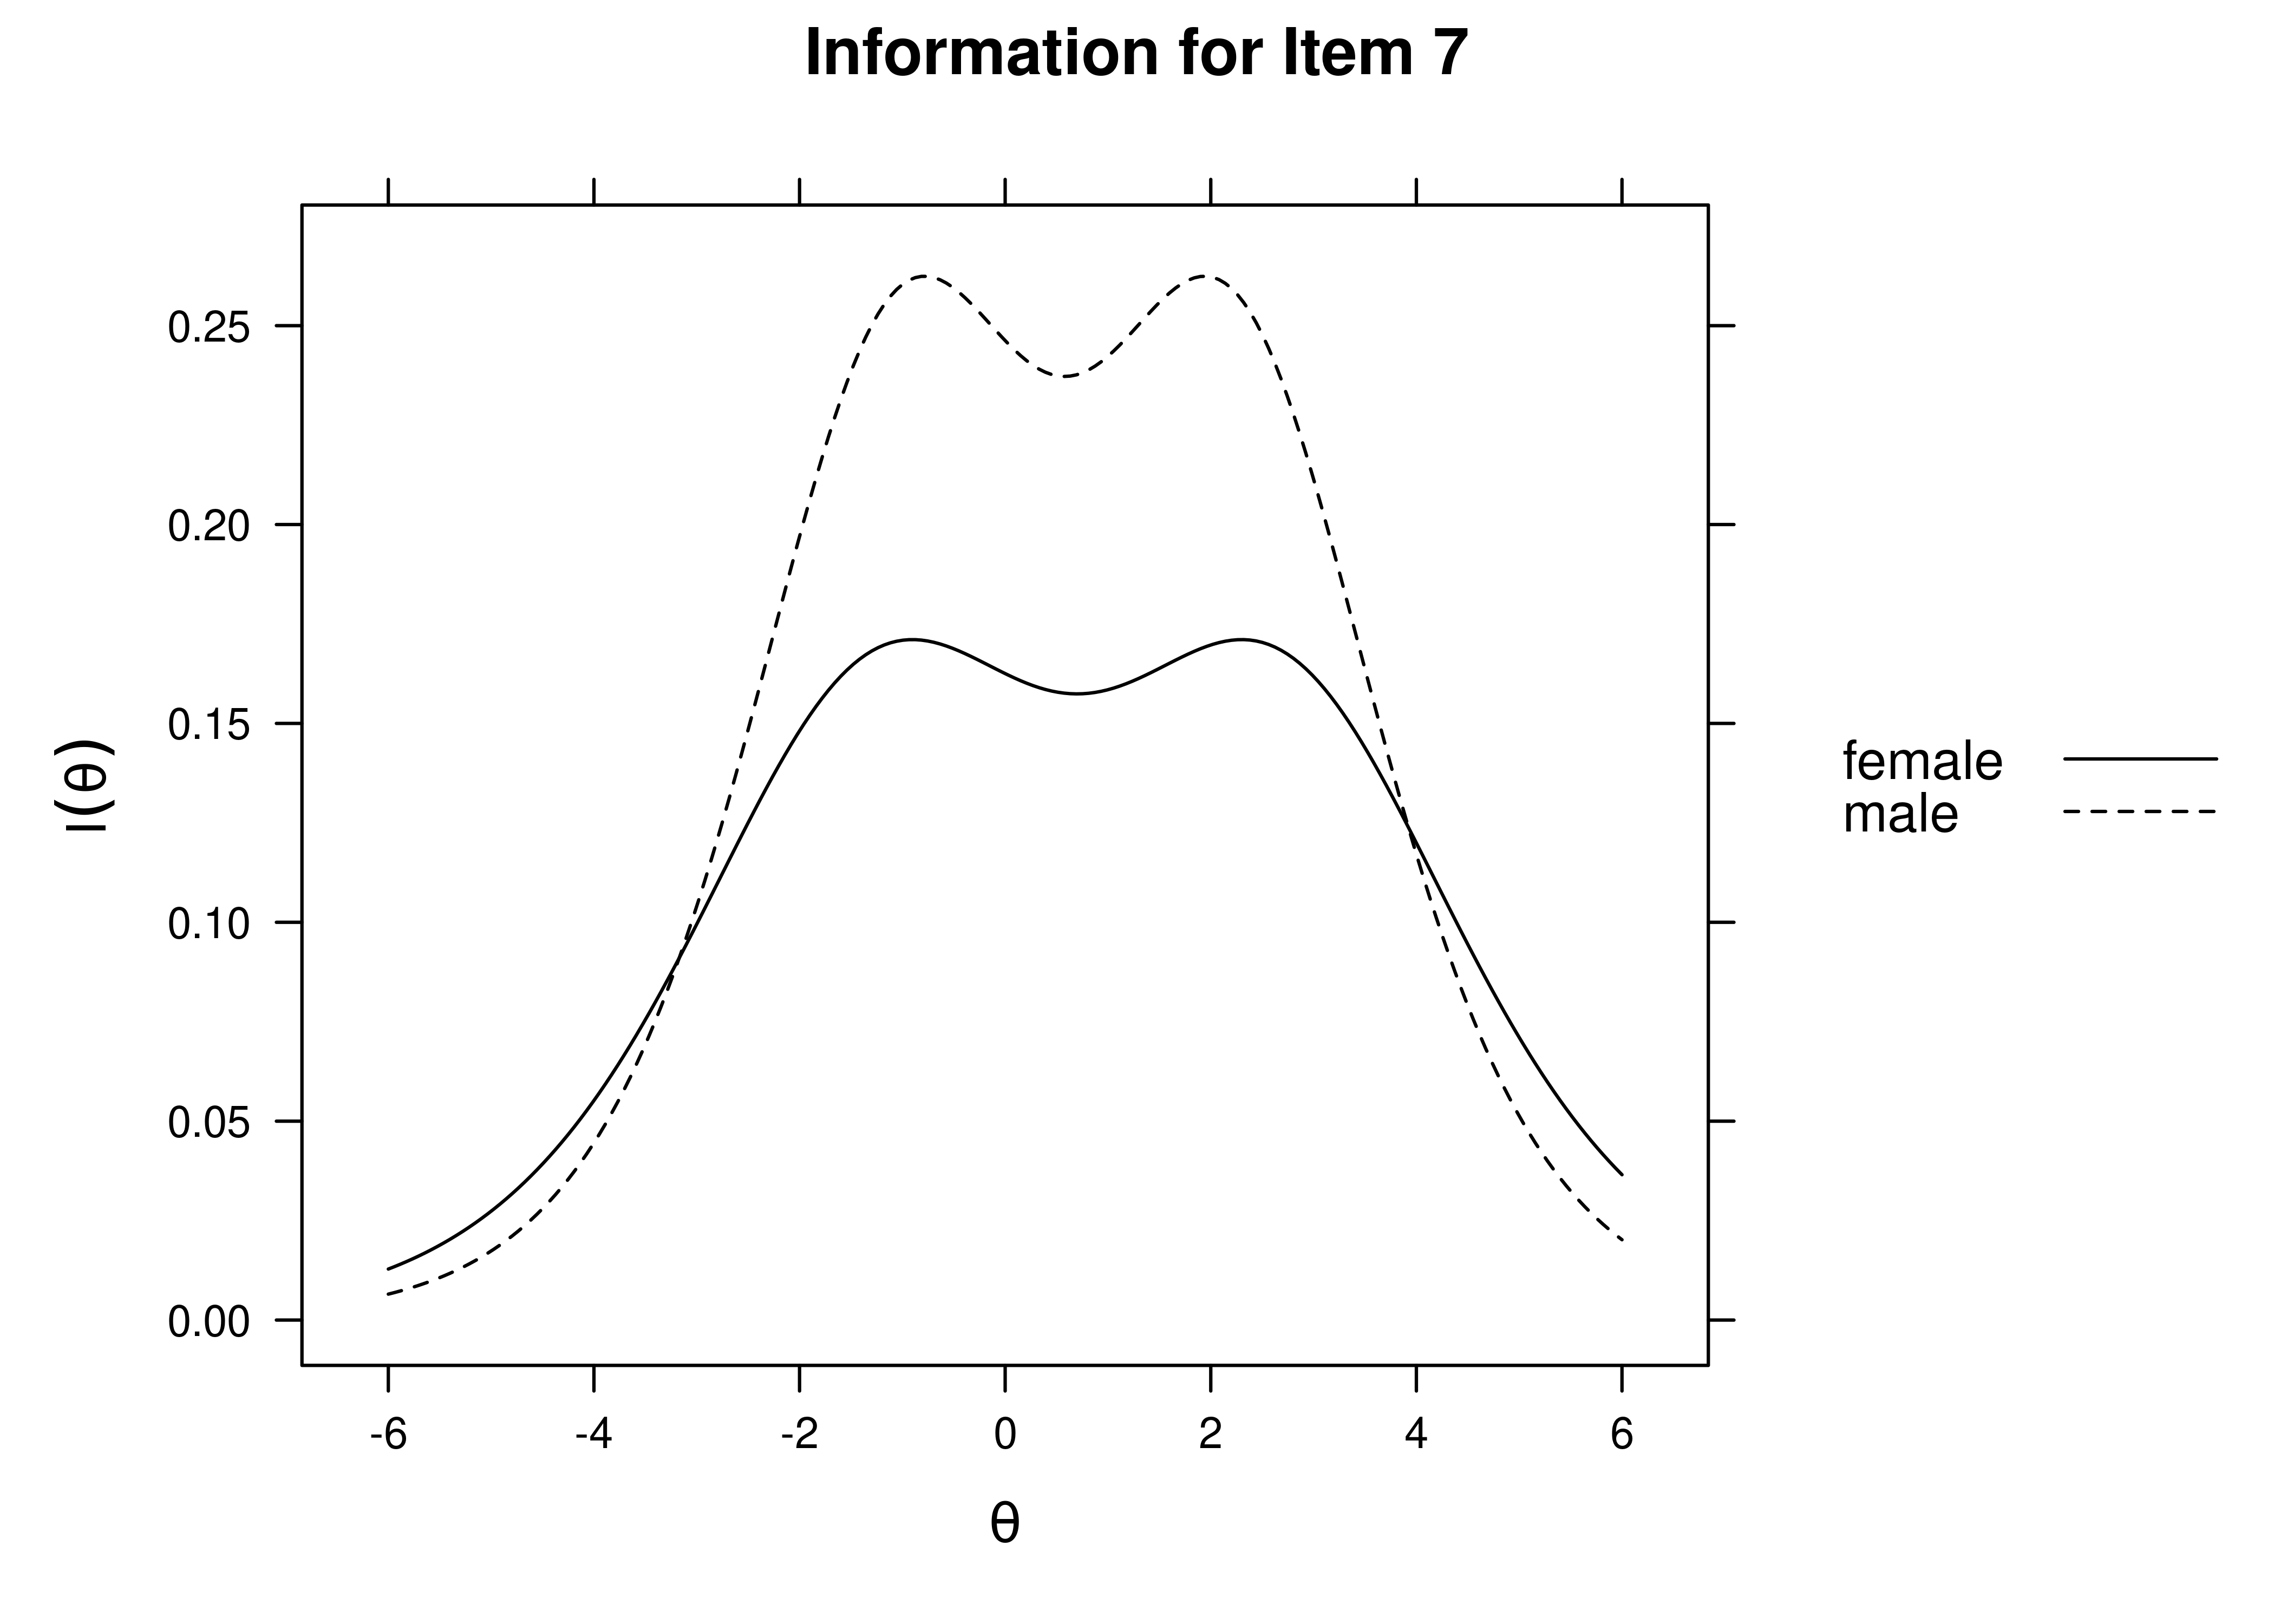 Item Information Curves by Sex: Item 7.